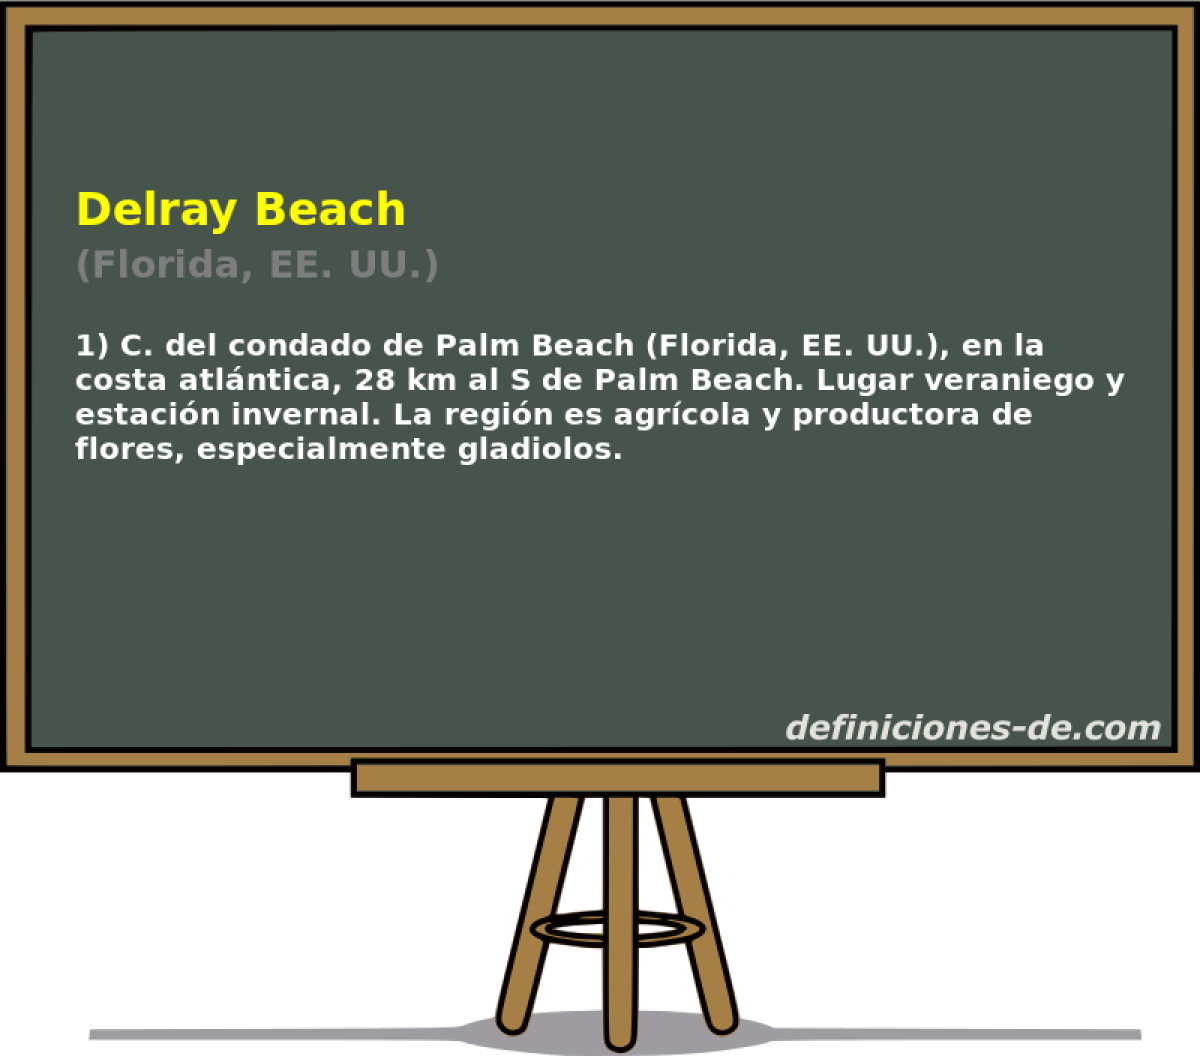 Delray Beach (Florida, EE. UU.)